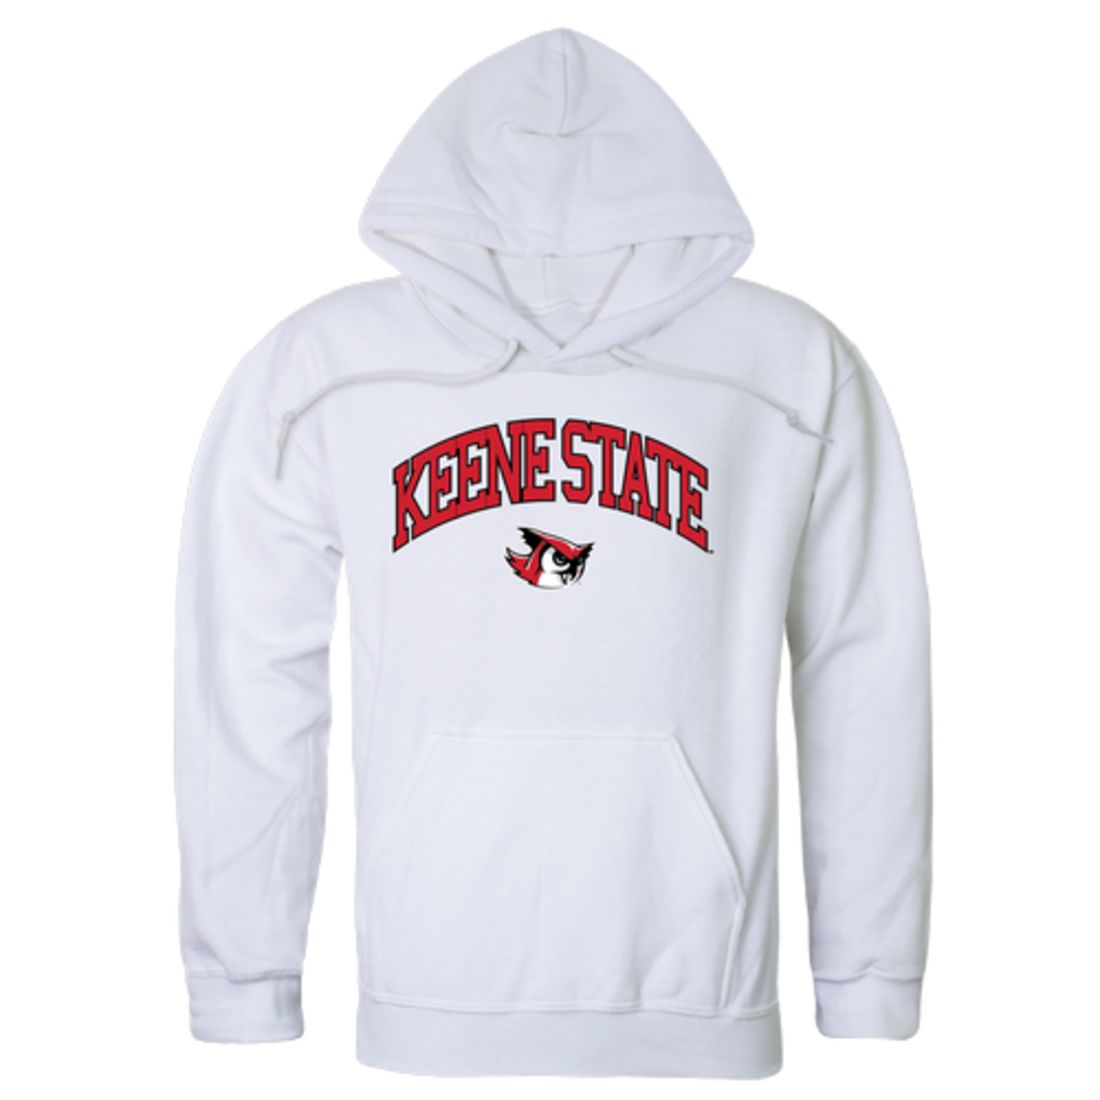 Keene State College Owls Campus Fleece Hoodie Sweatshirts